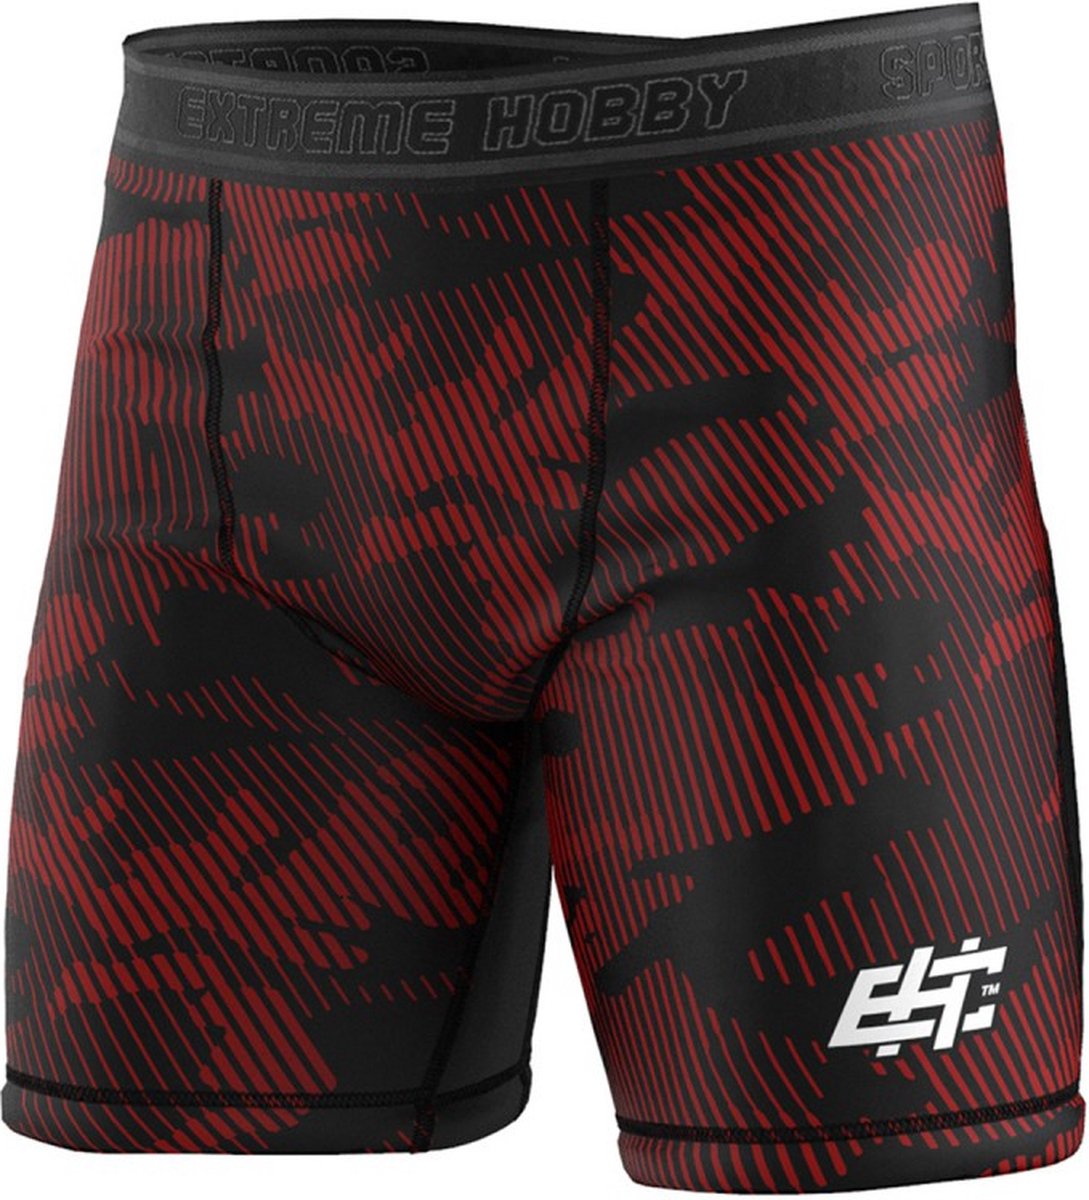 Extreme Hobby - MMA / BJJ Shorts - grappling Vale Tudo Shorts - Compressie Shorts -Havoc Red - Rood, Zwart - Maat M